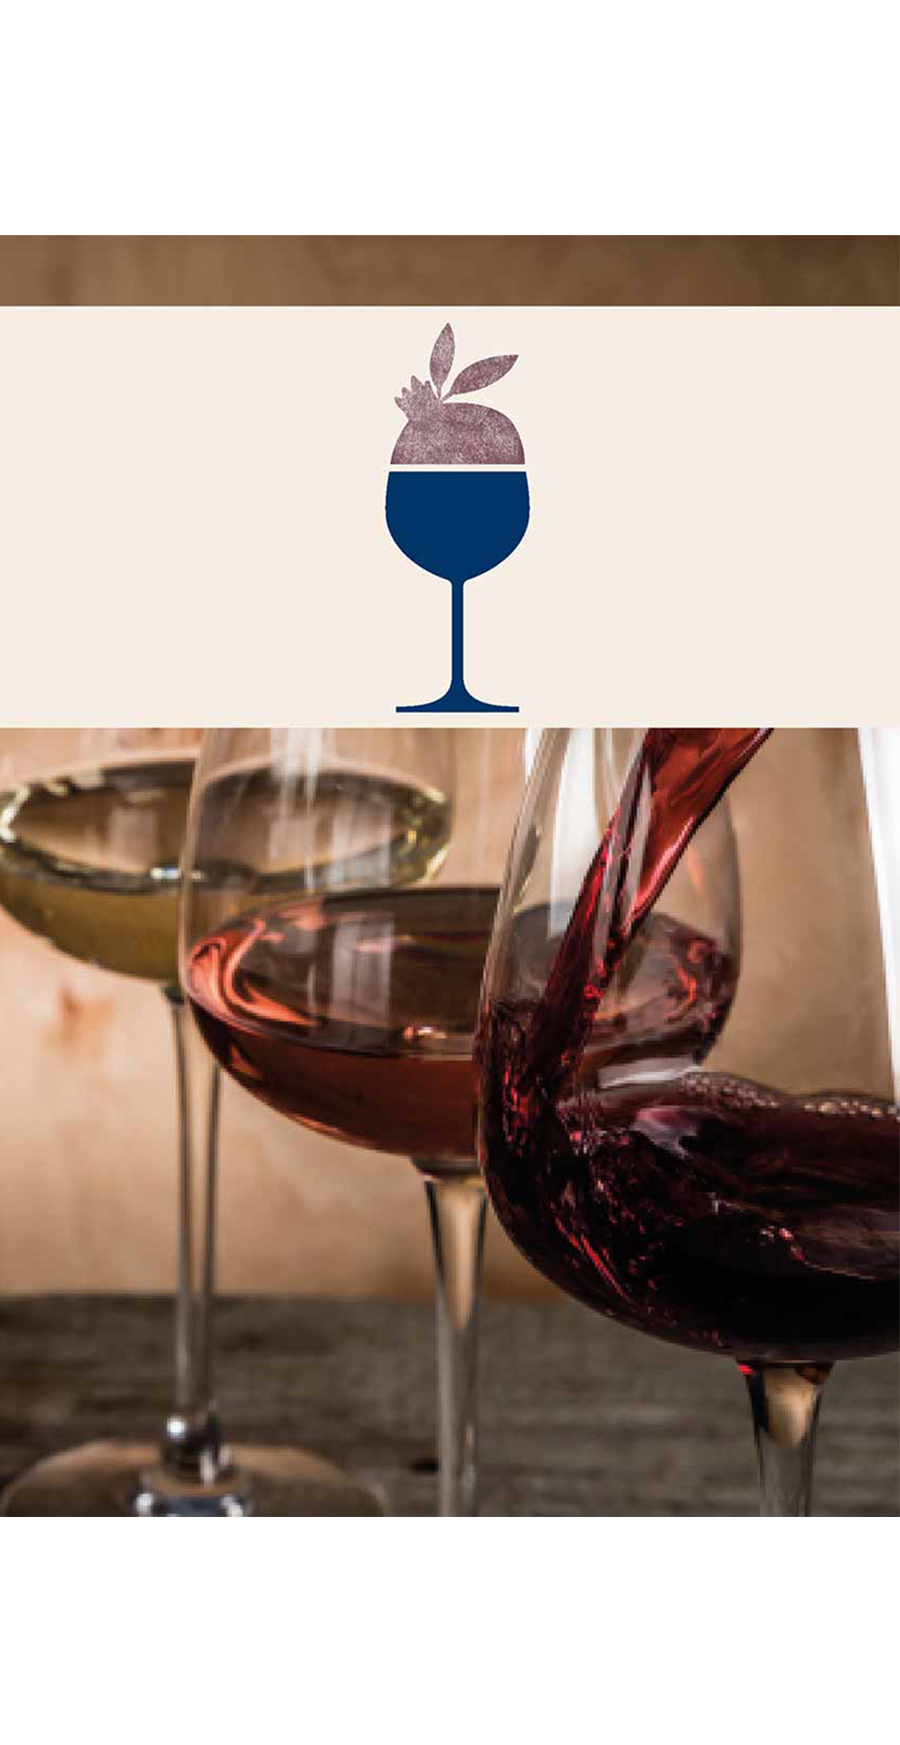 Landolt - Landolt Tasting Lachs & Wein 20. Januar 2022